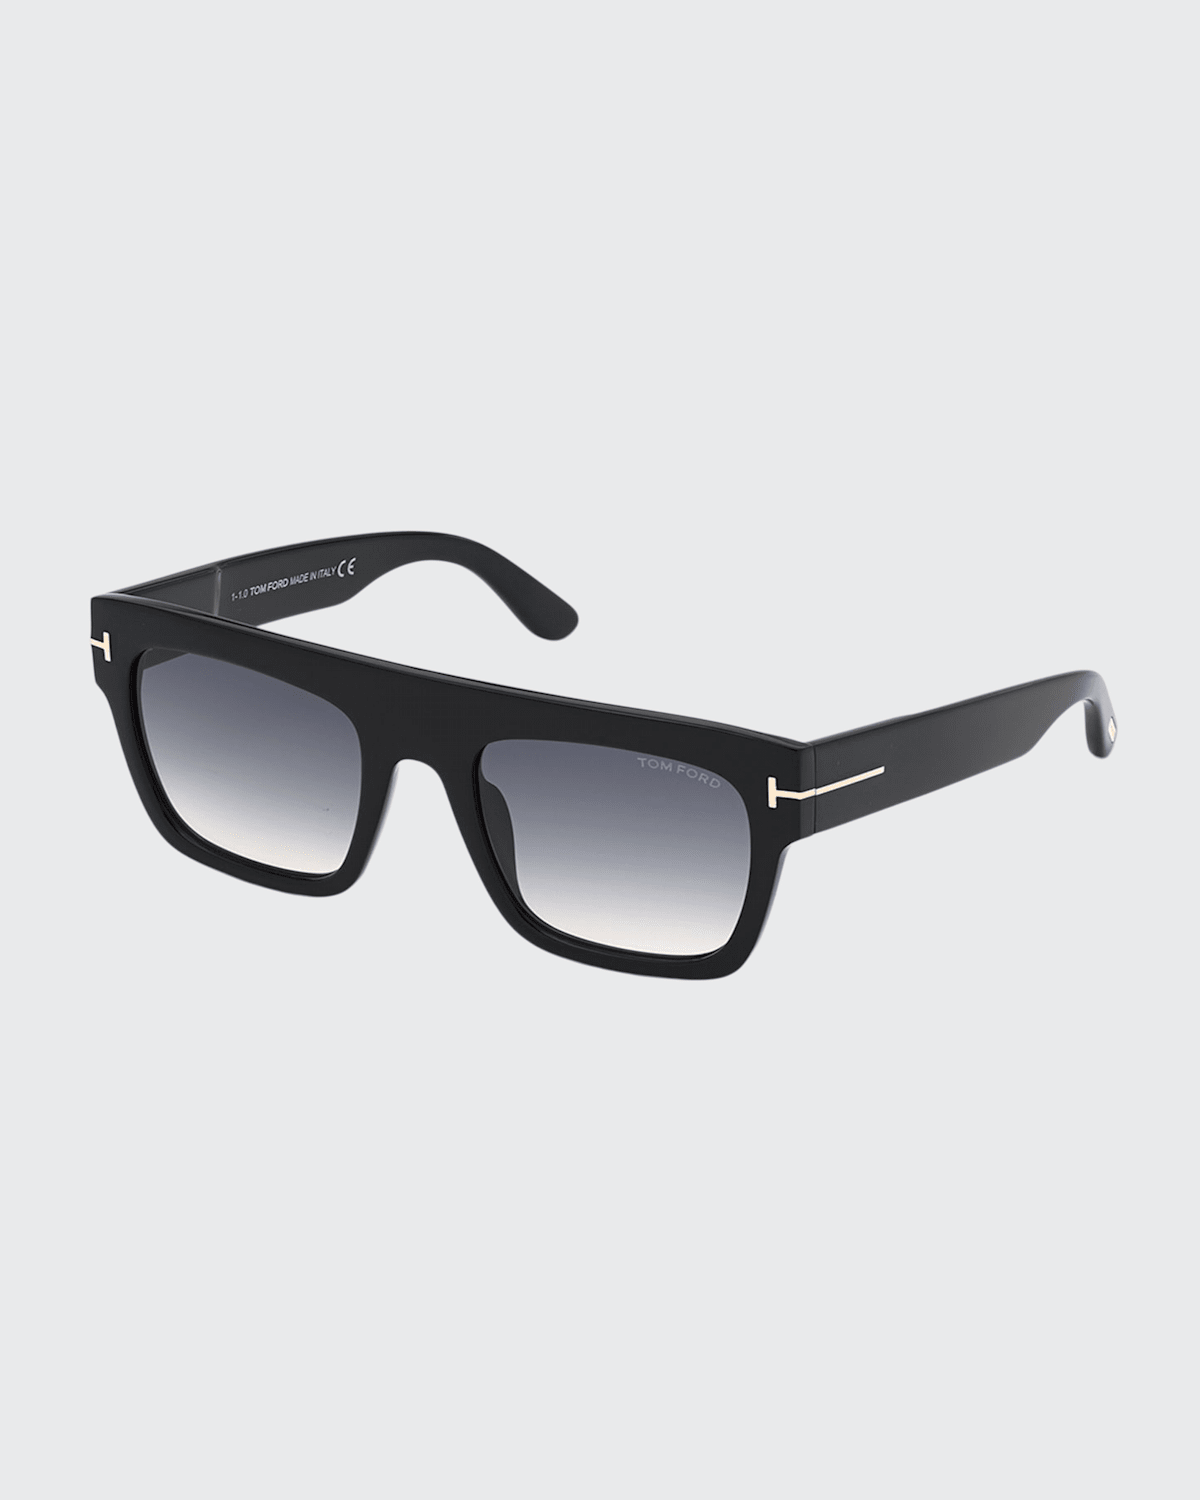 Tom Ford Renee Square Plastic Sunglasses In N/a